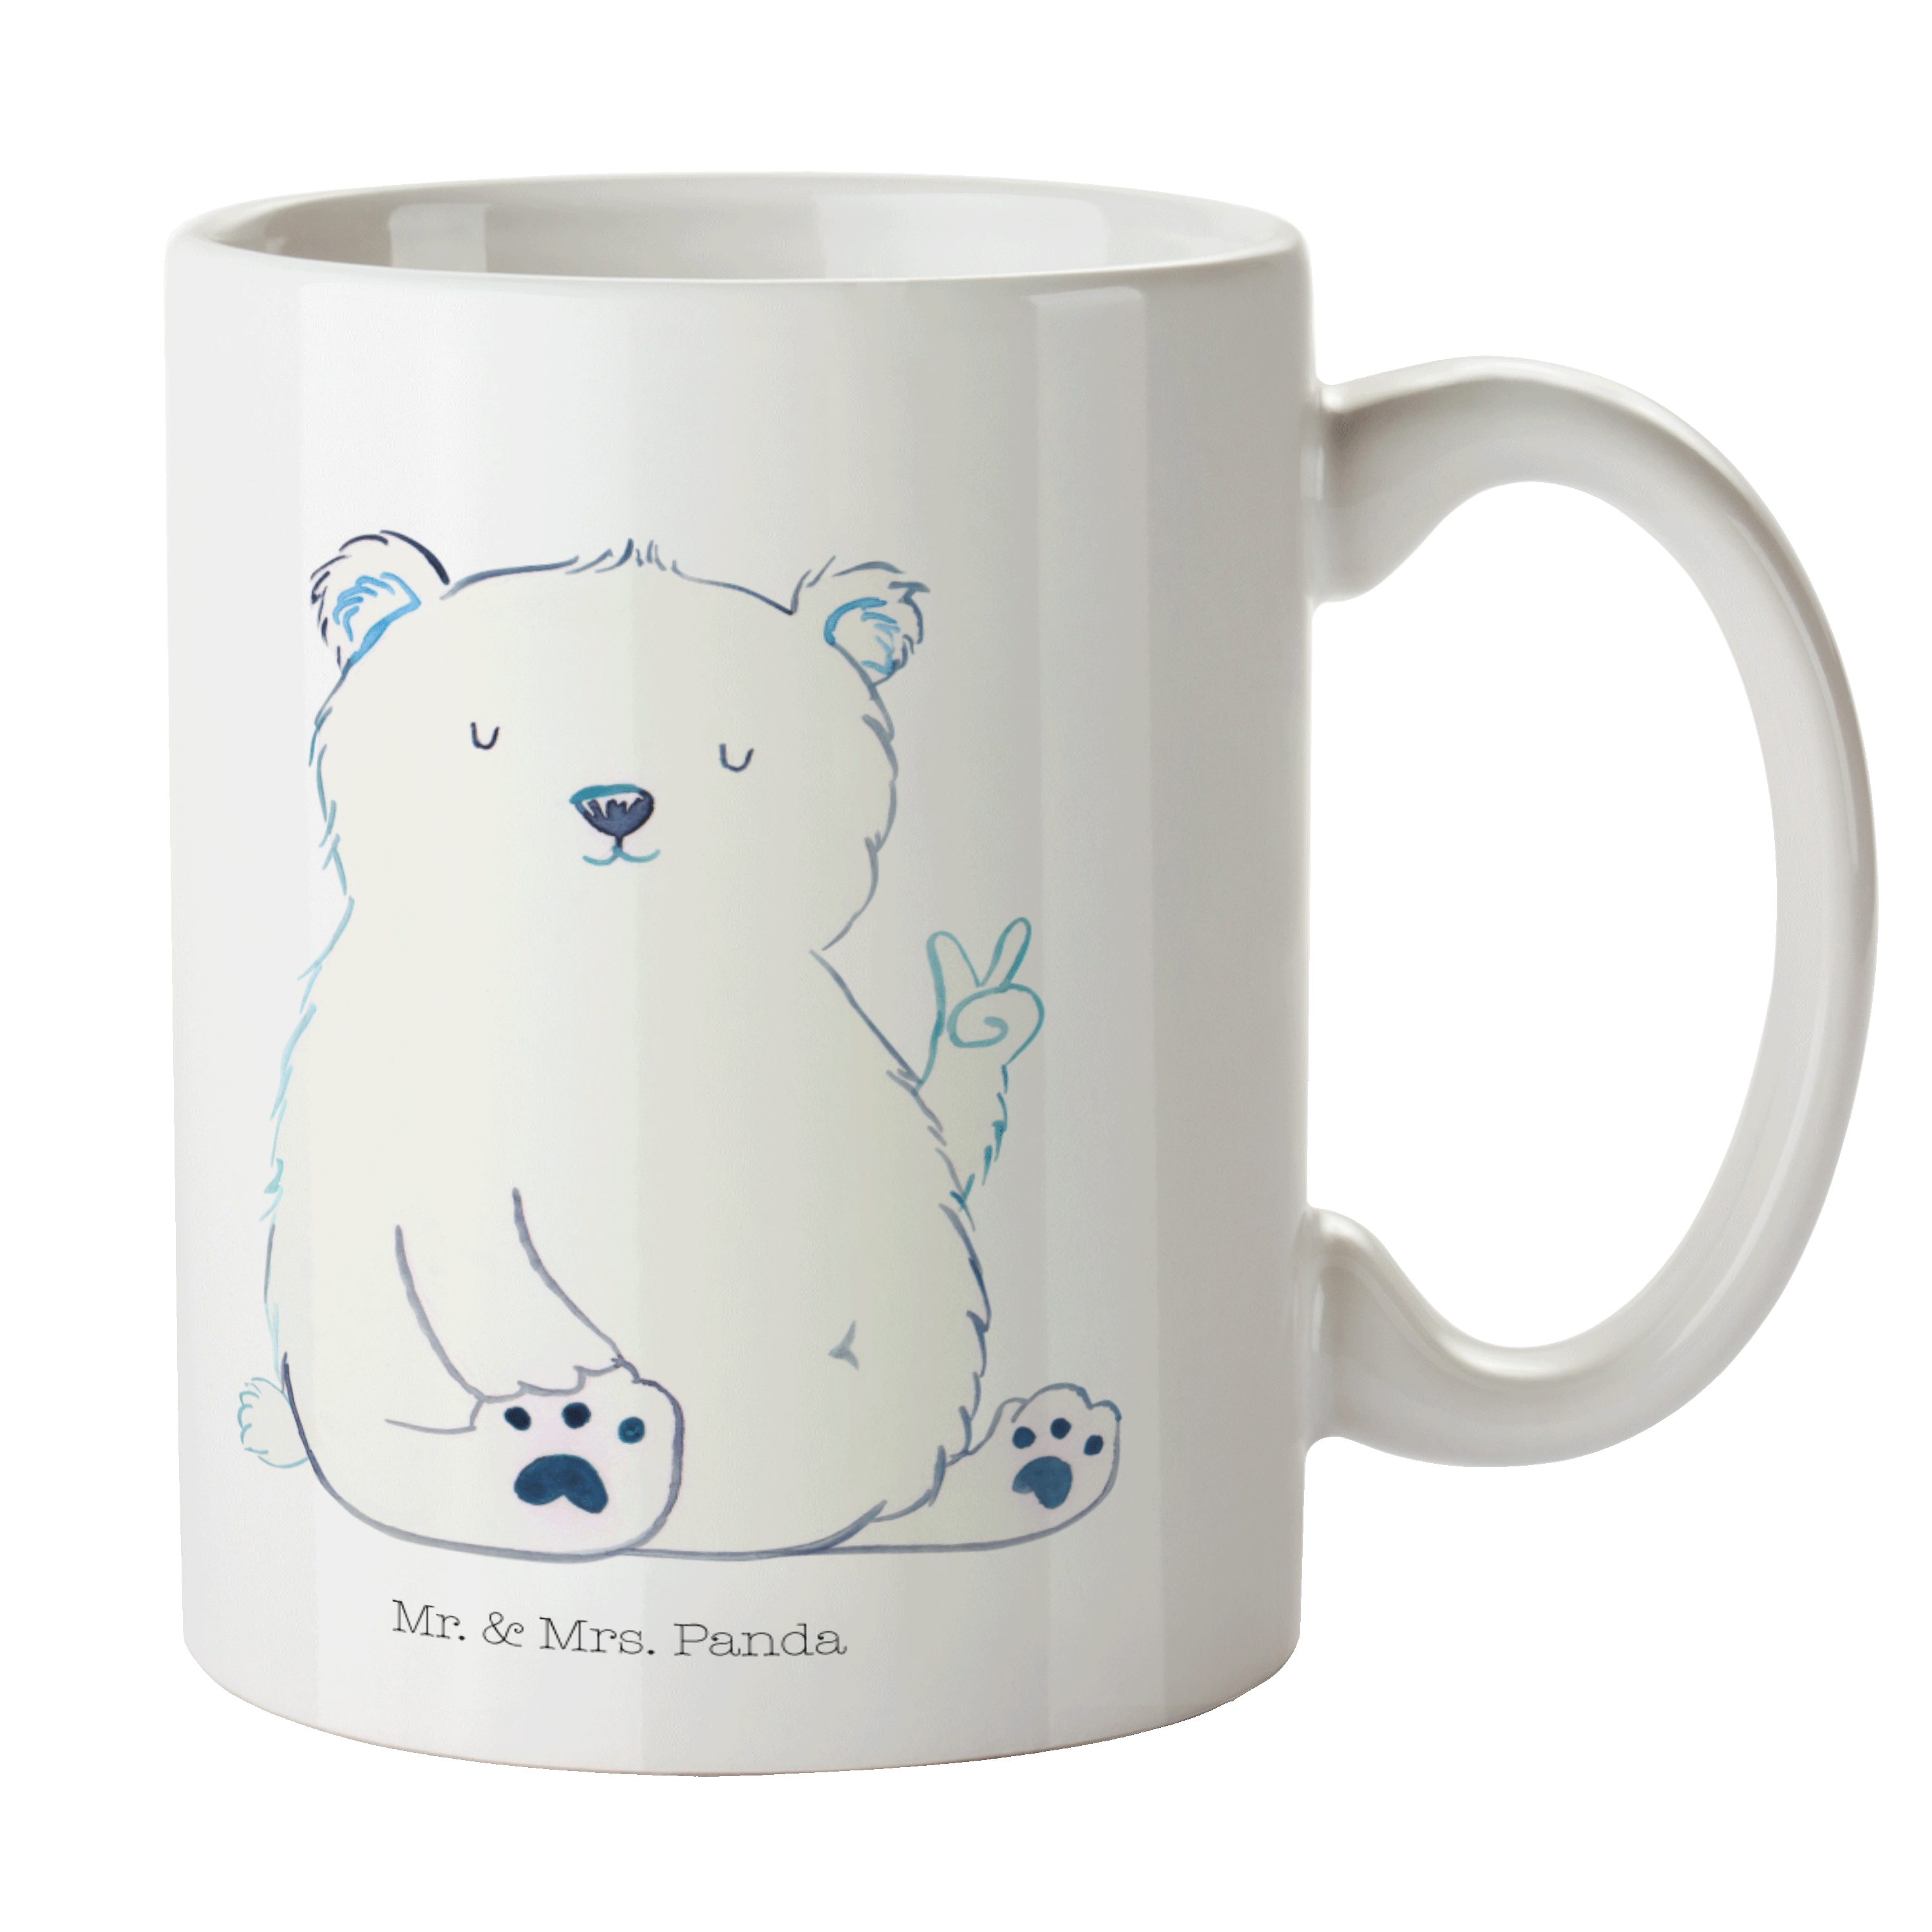 Mr. & Mrs. Panda Tasse Eisbär Faul - Weiß - Geschenk, Tasse, Porzellantasse, Teddy, Kaffeeta, Keramik | Tassen